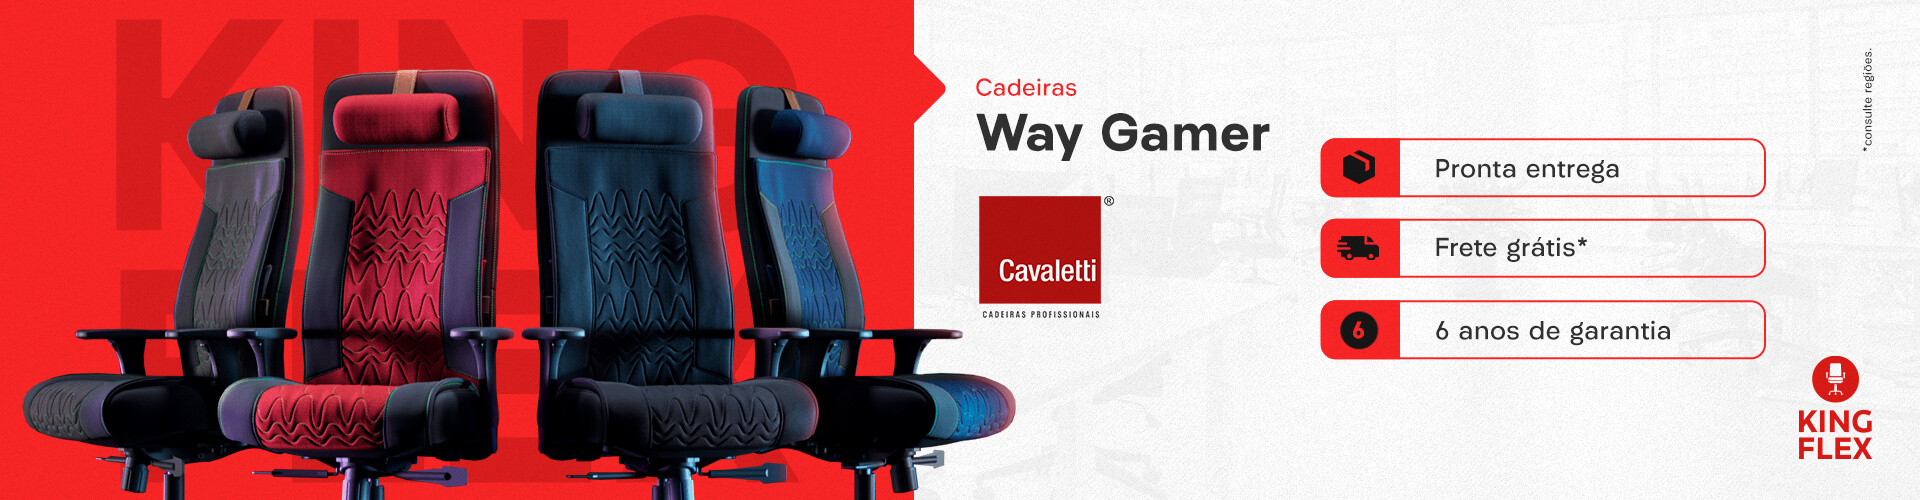 Way Gamer Cavaletti